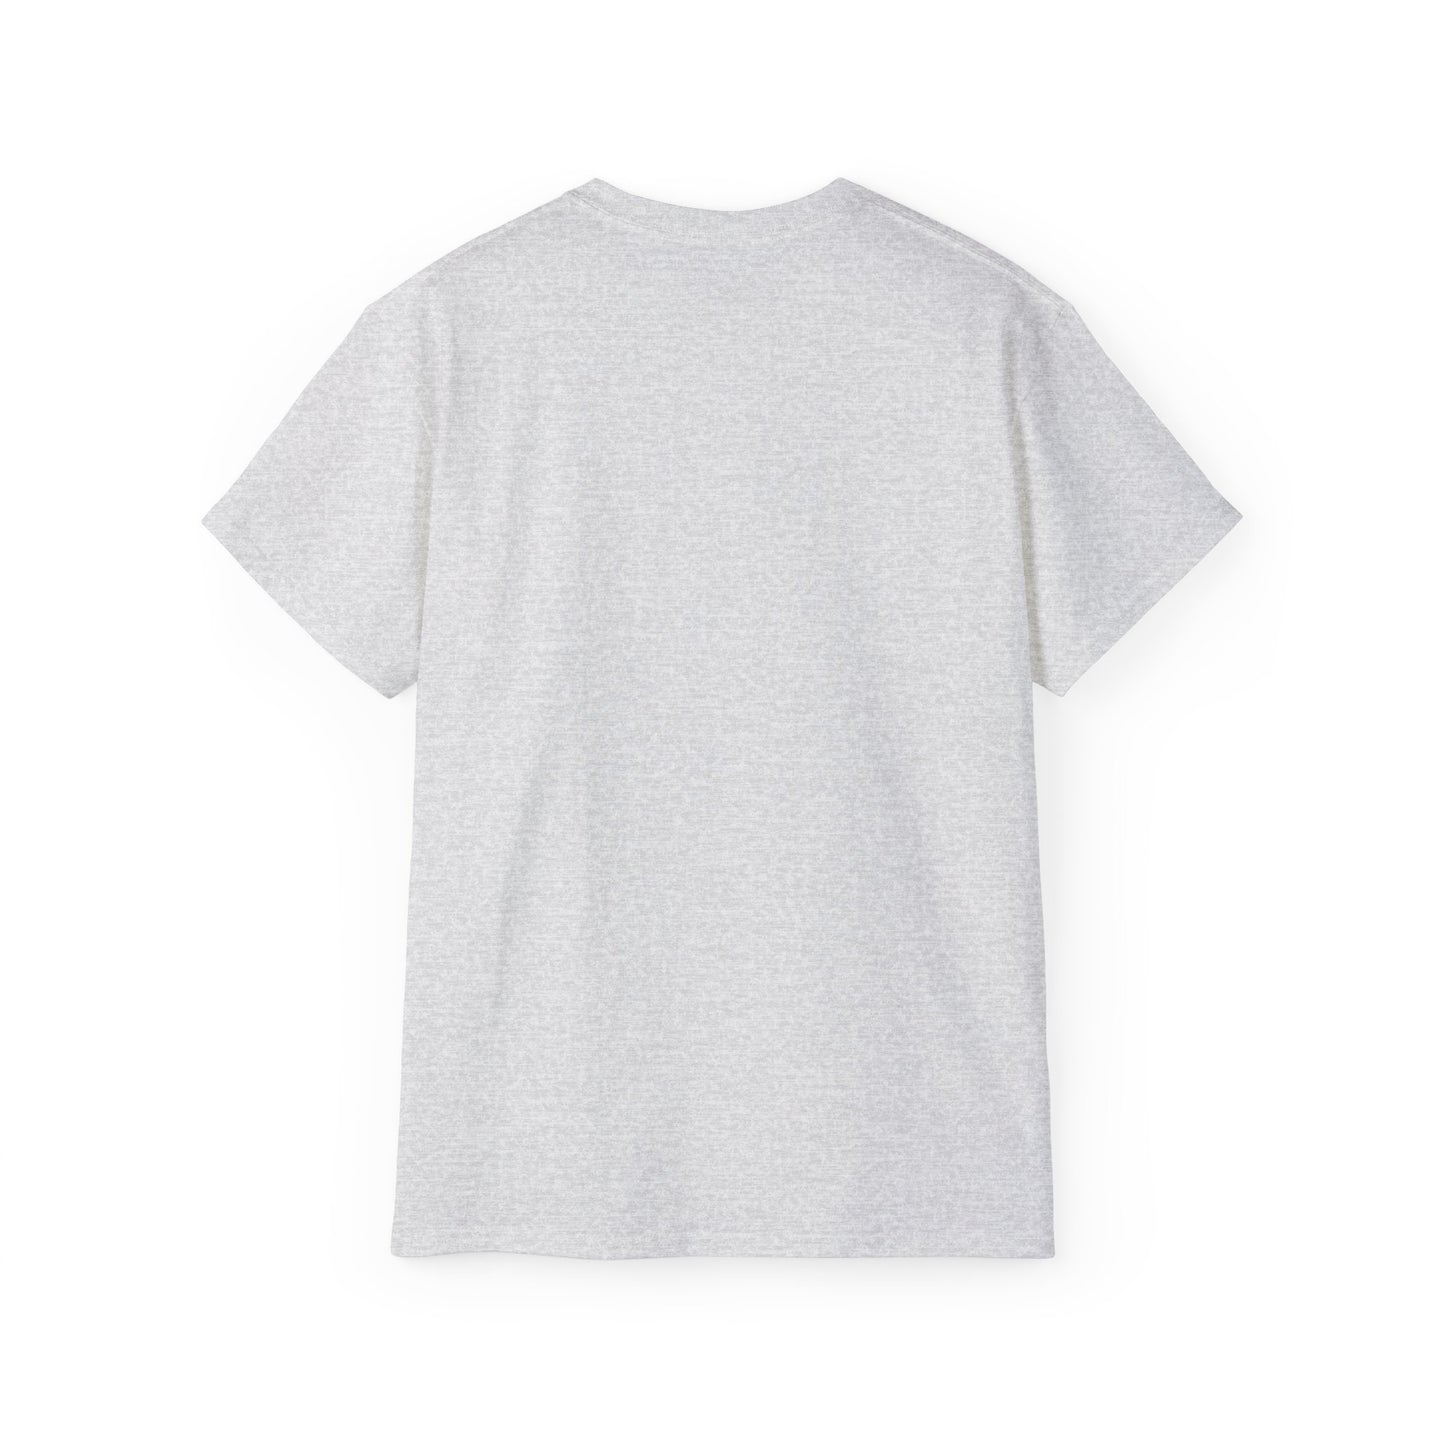 "Picture Shirt" Mr. Zip USPS Logo Man "Unisex T-shirt